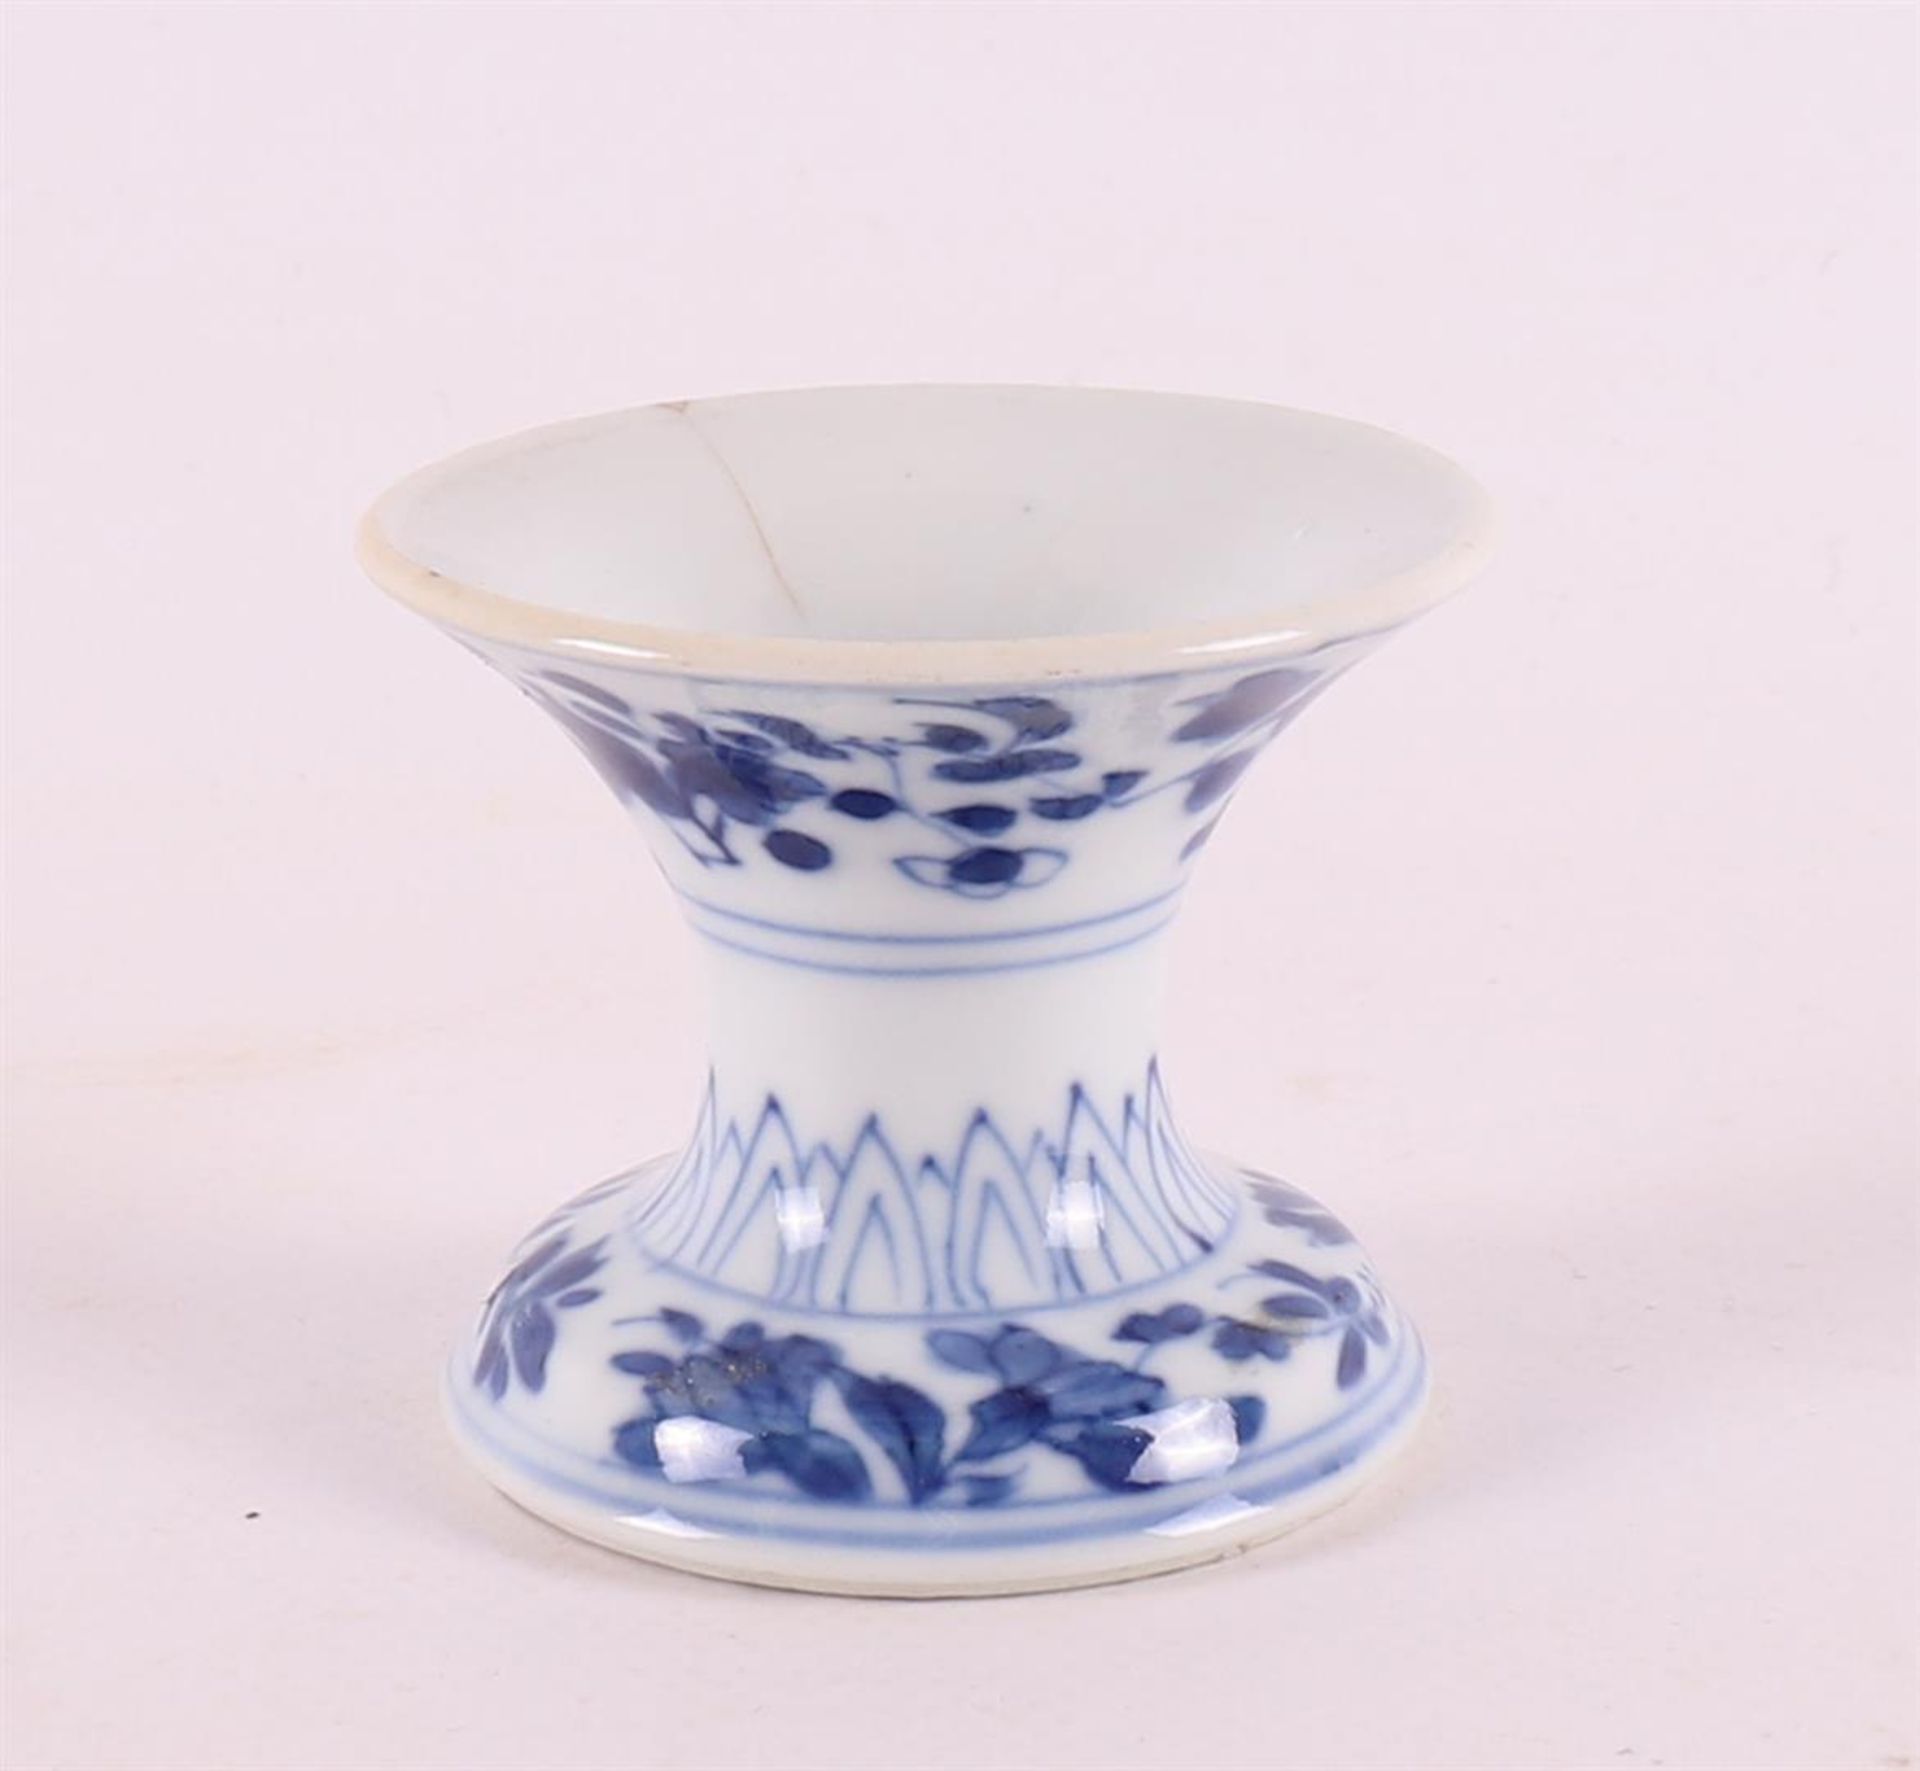 A blue and white porcelain one-light candlestick, China, Kangxi, around 1700. Blue underglaze floral